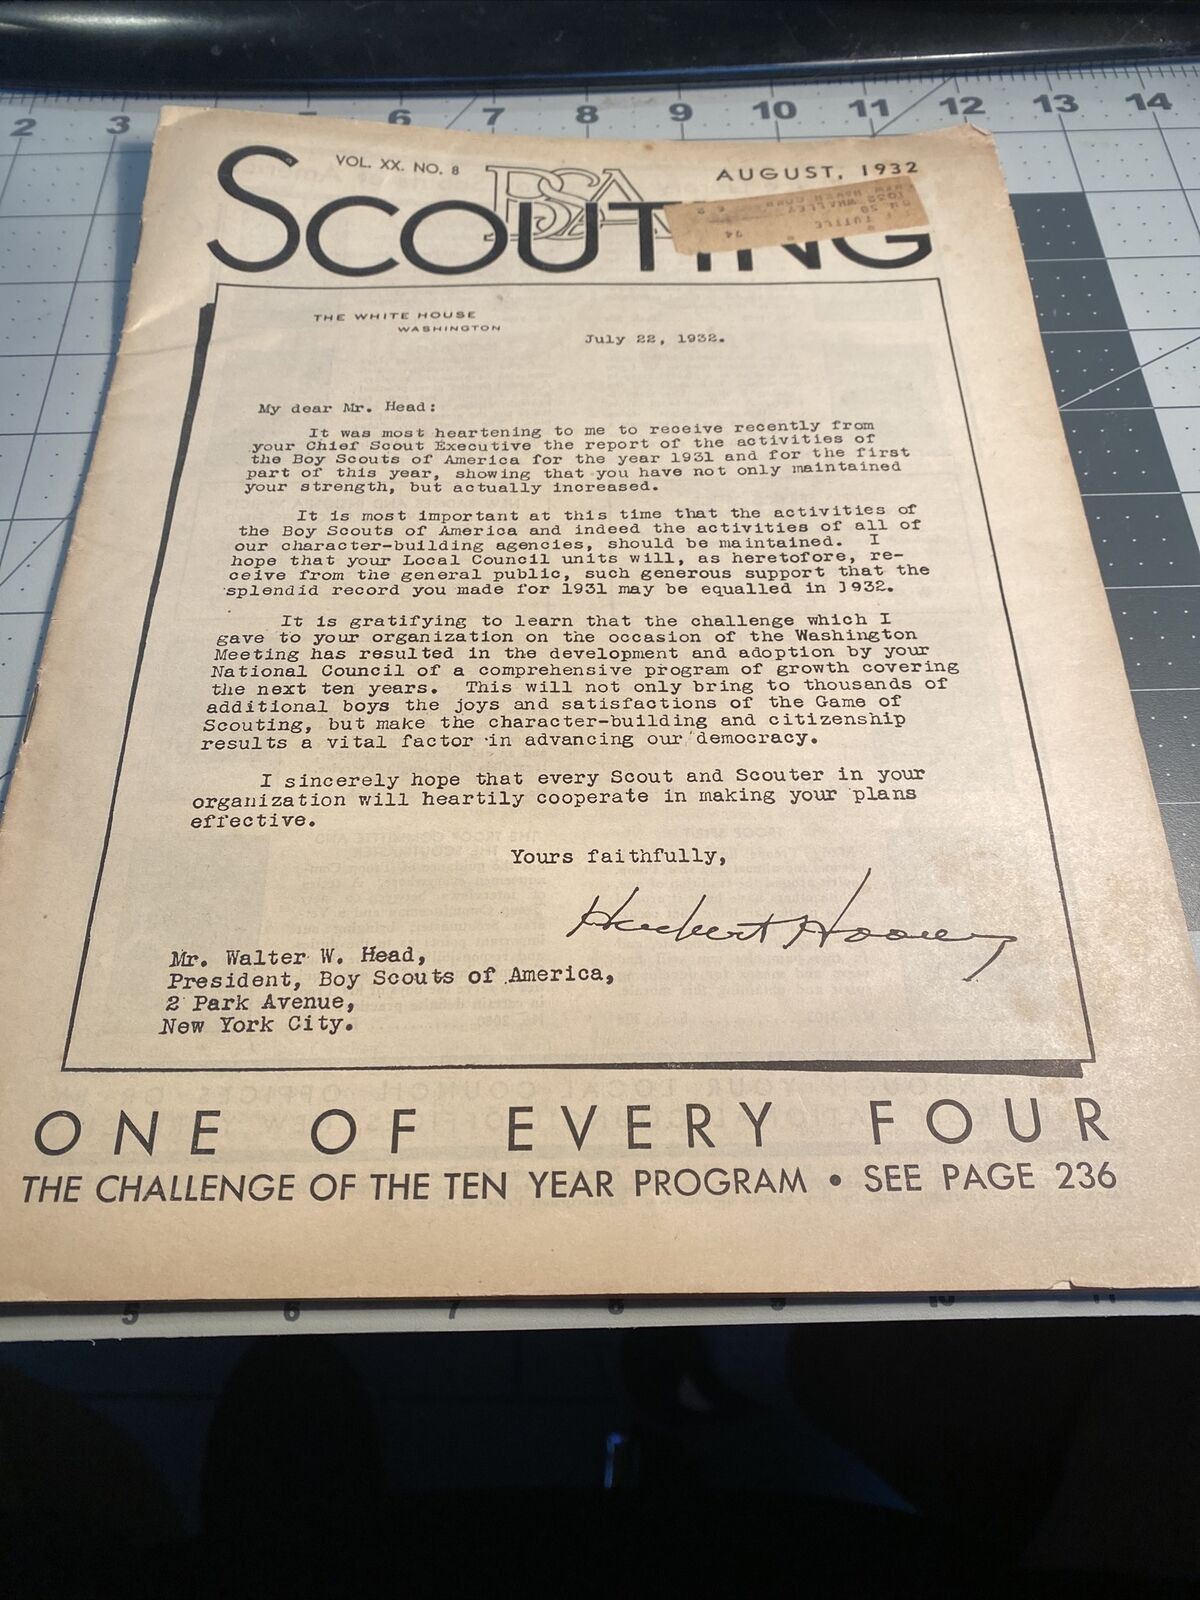 Scouting Magazine August 1932 Vol XX no. 8 BSA Boy Scouts of America 32-535C